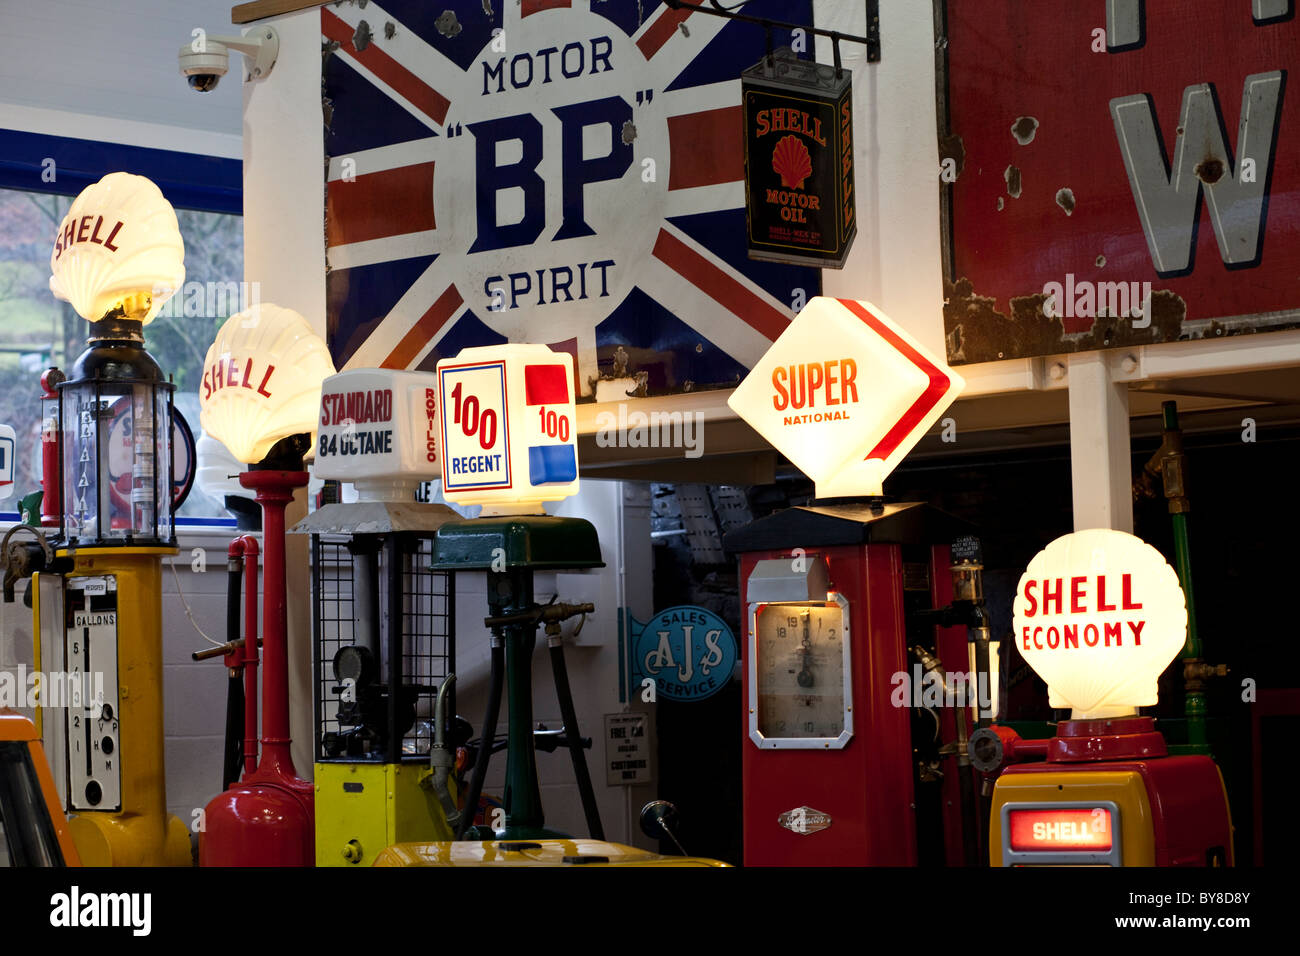 Lakeland Motor Museum, at Backbarrow, Cumbria, UK, showing ancient Petrol Pumps Stock Photo